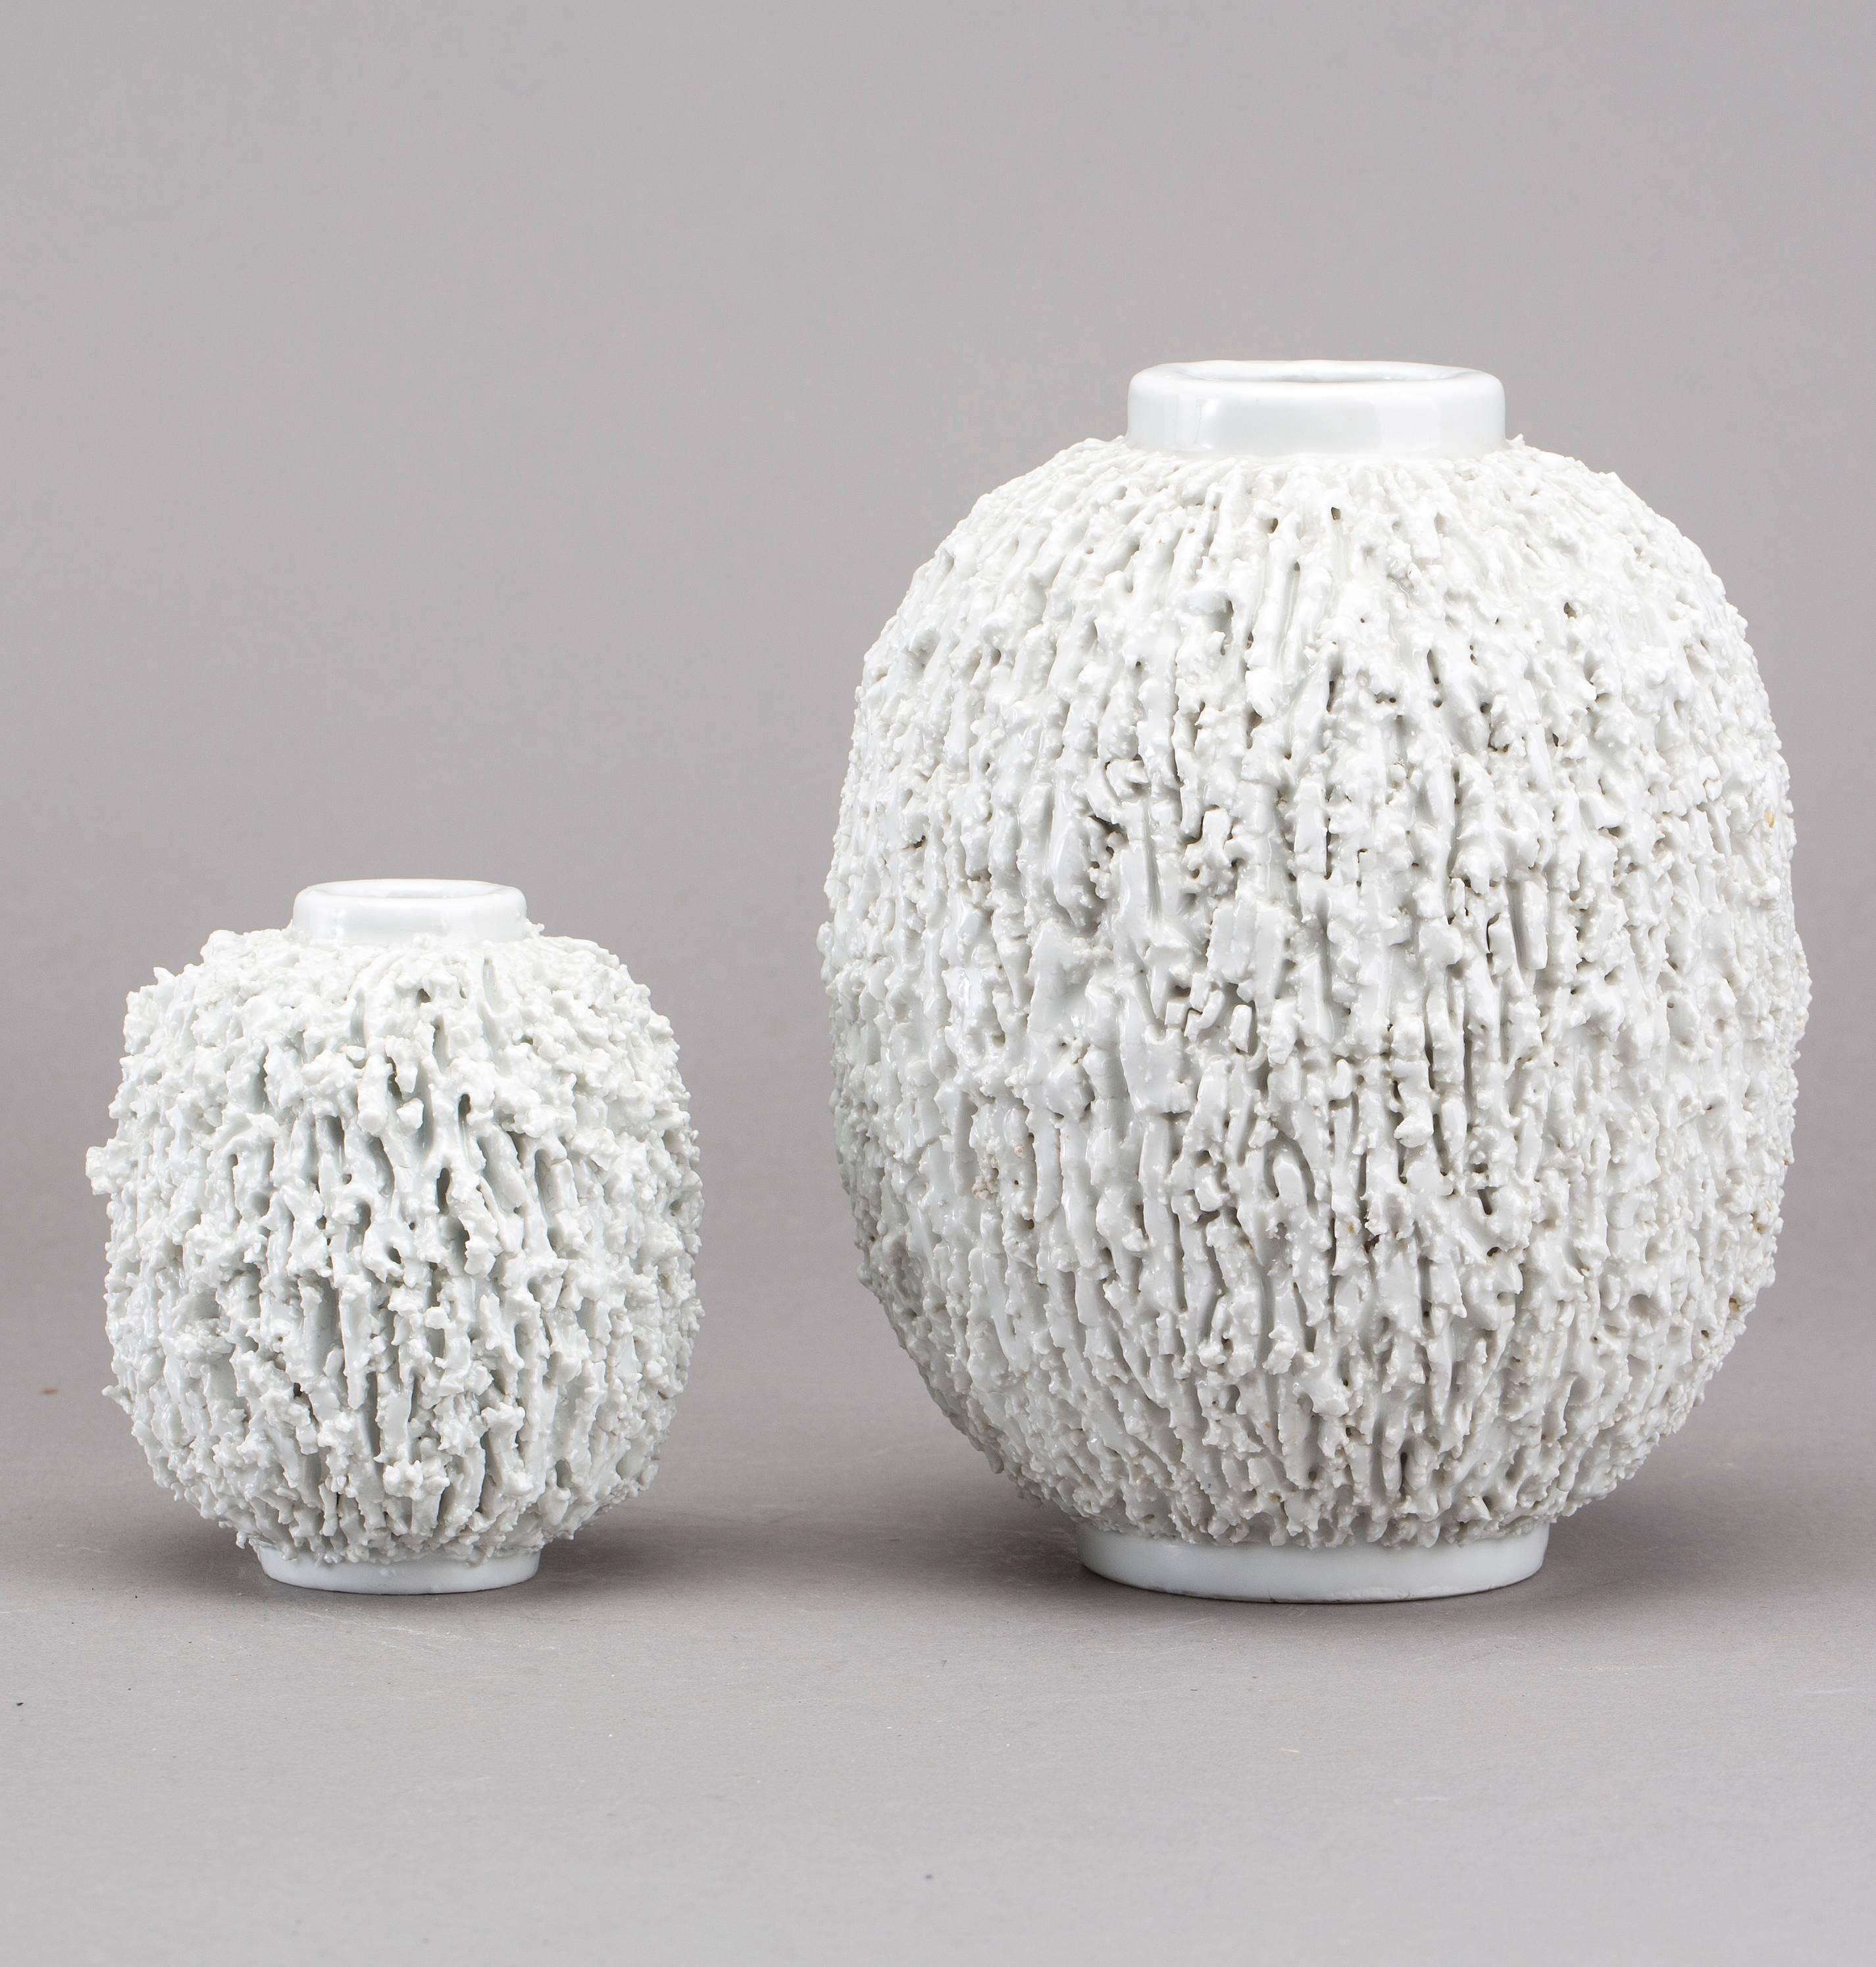 Ceramic vases in bulbous shape, composed of a “porcupine” ceramic texture throughout

Measures: Small vase 12 cm 
Large vase 21 cm.